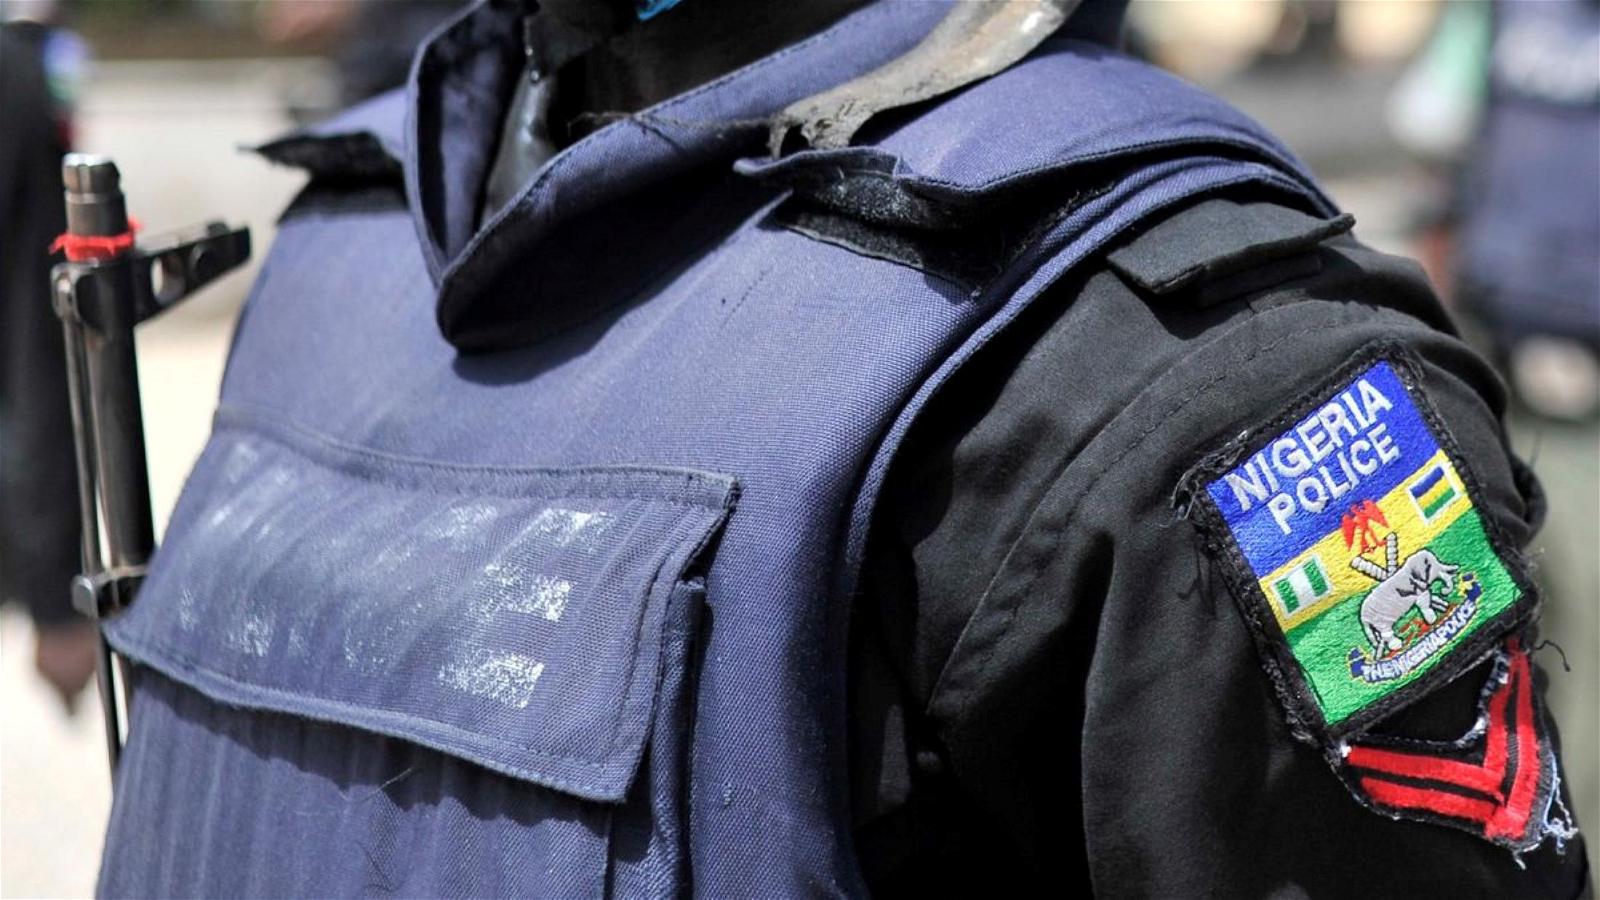 3 policemen sanctioned for unprofessional conduct - Vanguard News